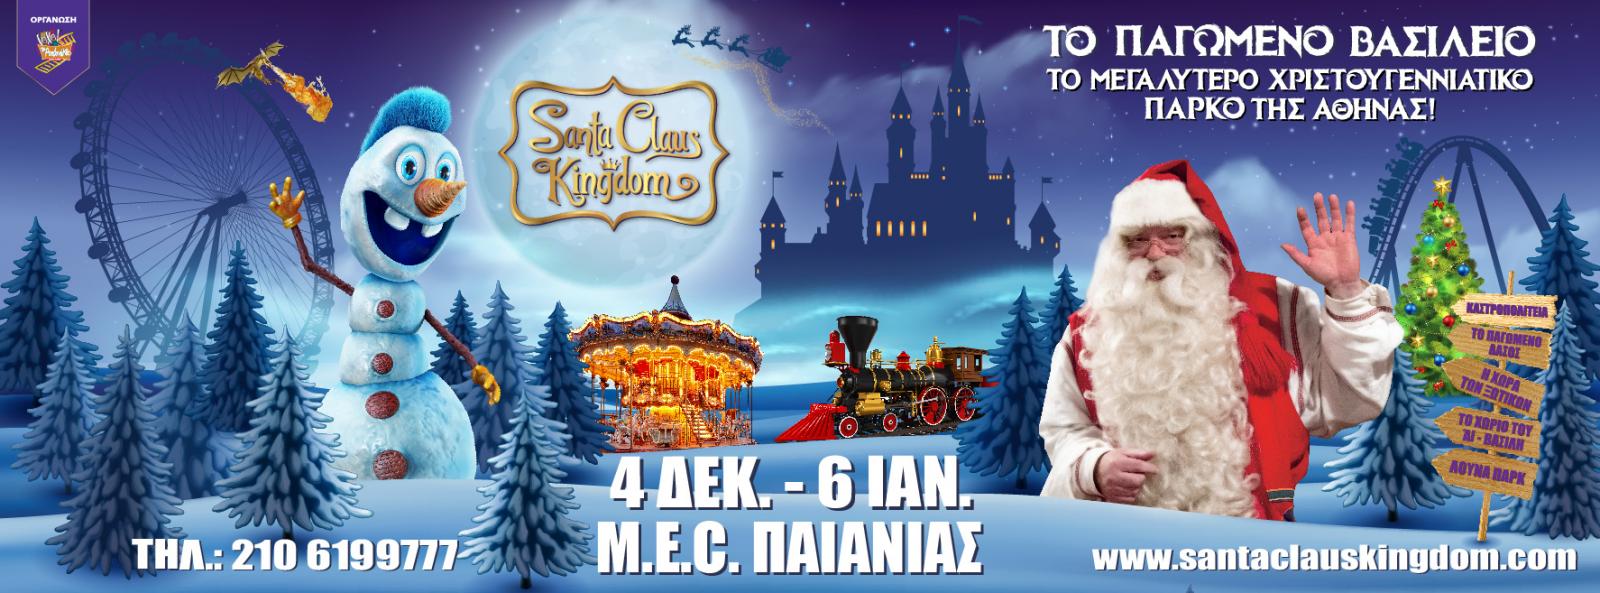 Santa Claus Kingdom, M.E.C. Παιανίας